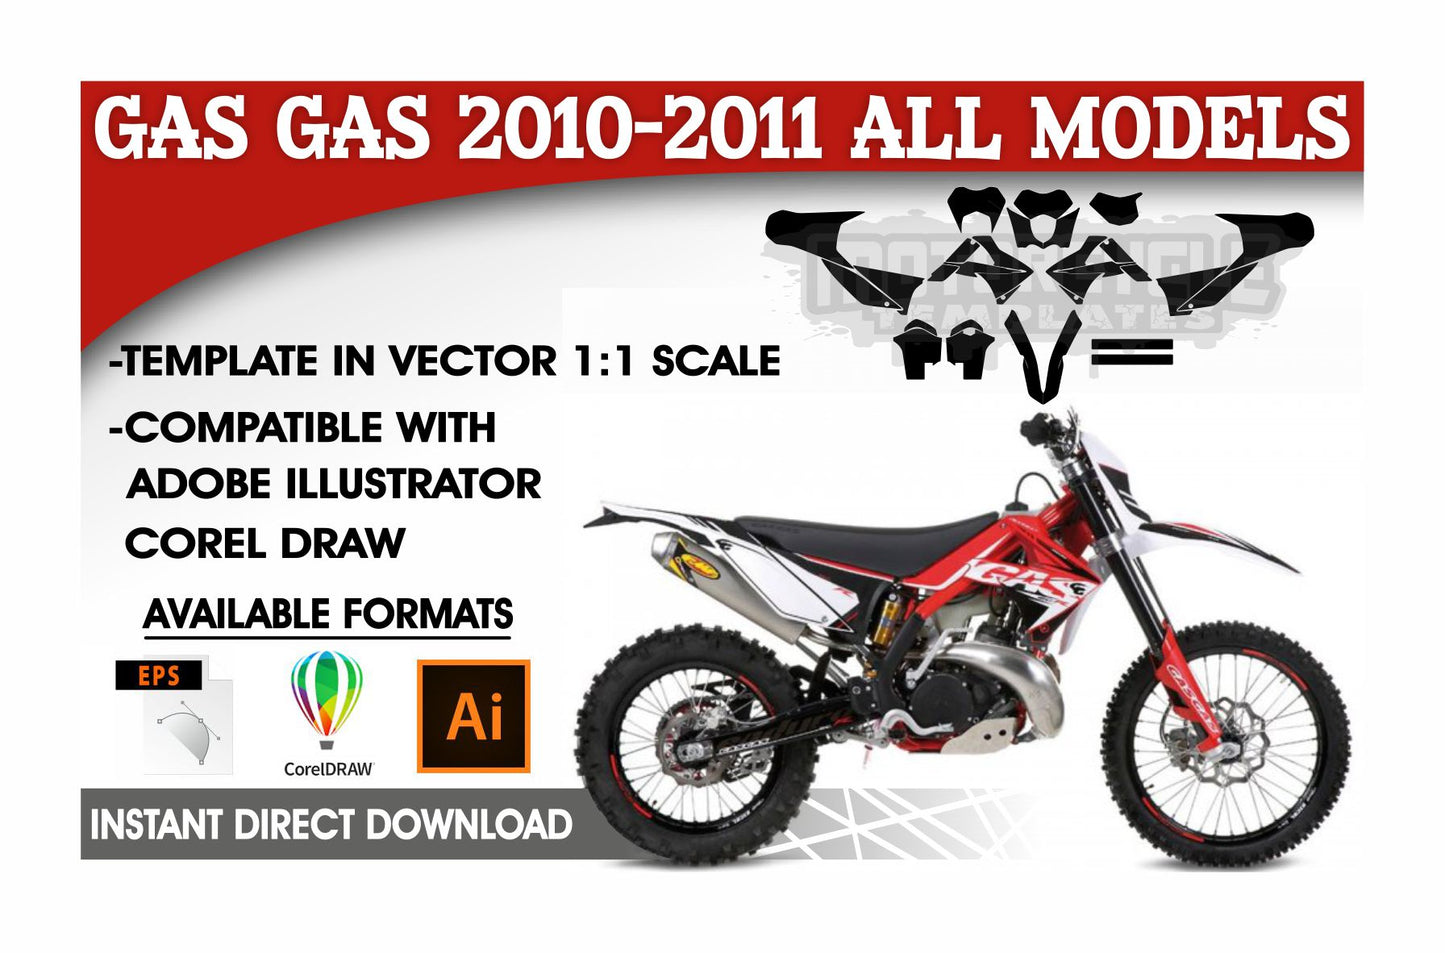 GAS GAS 2010-2011 All Models